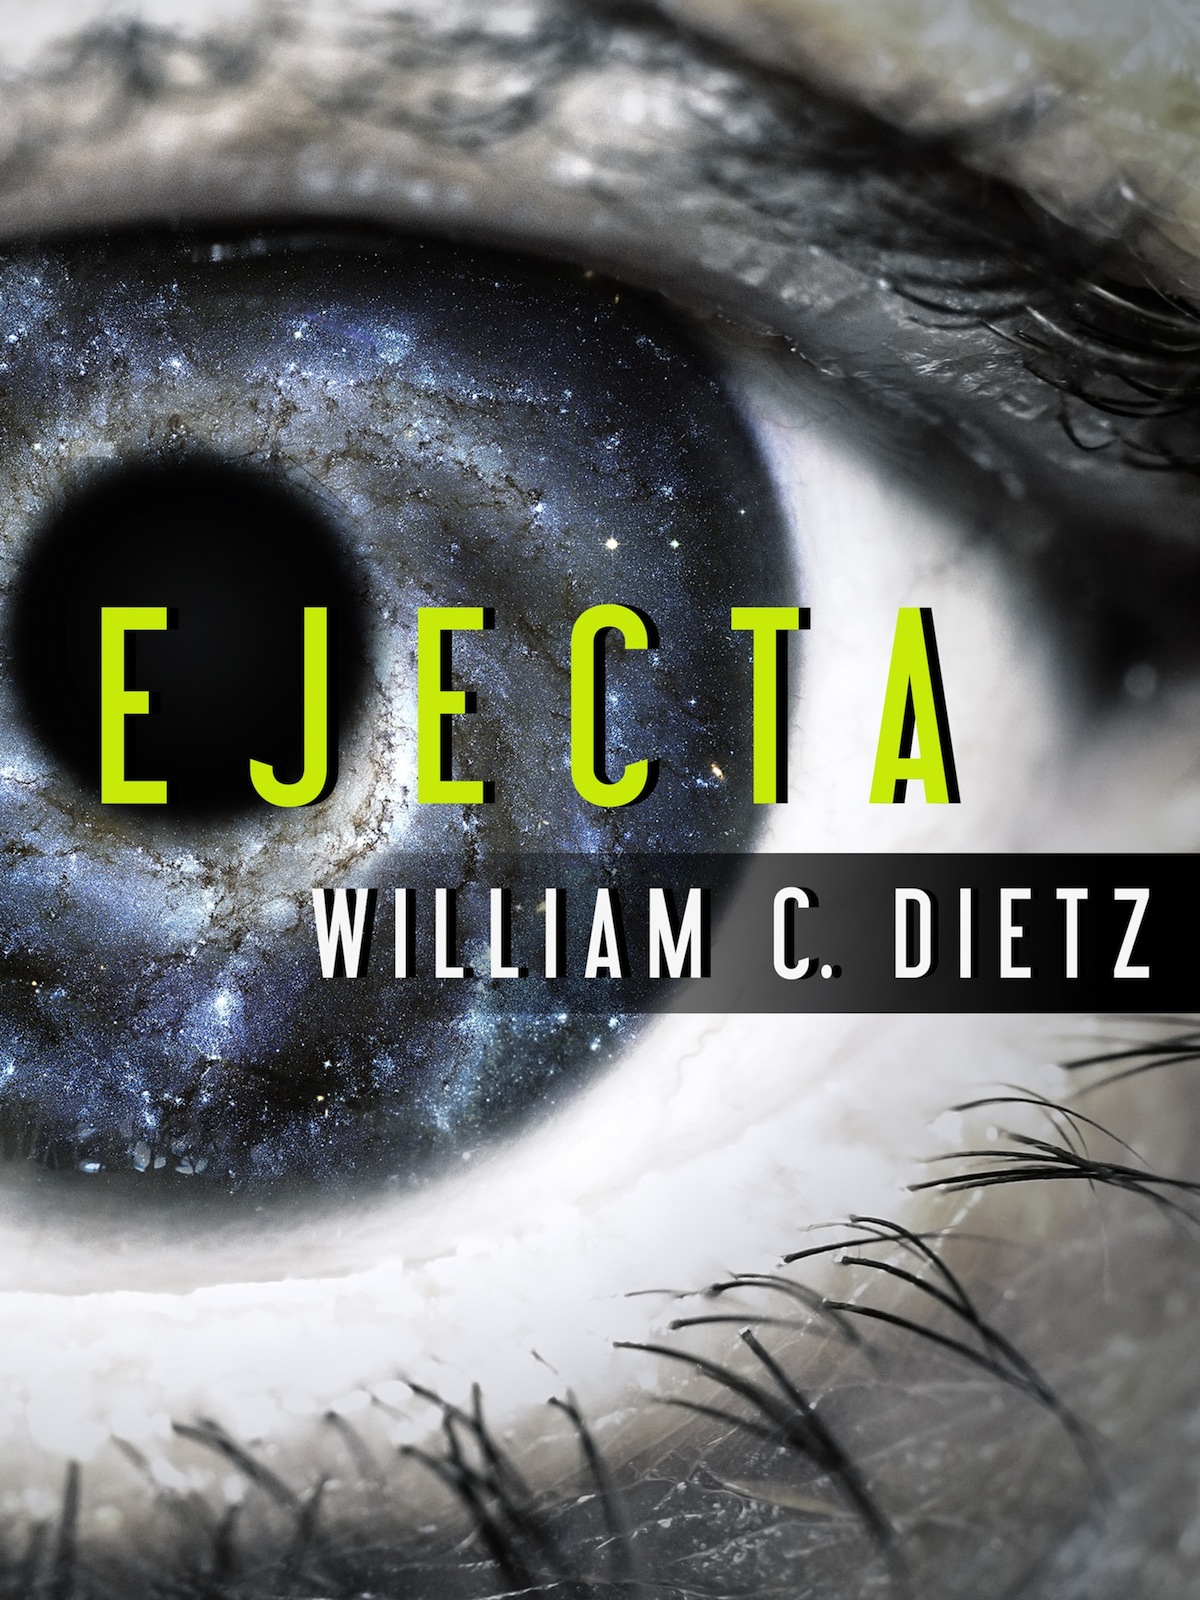 Ejecta (2015) by William C. Dietz